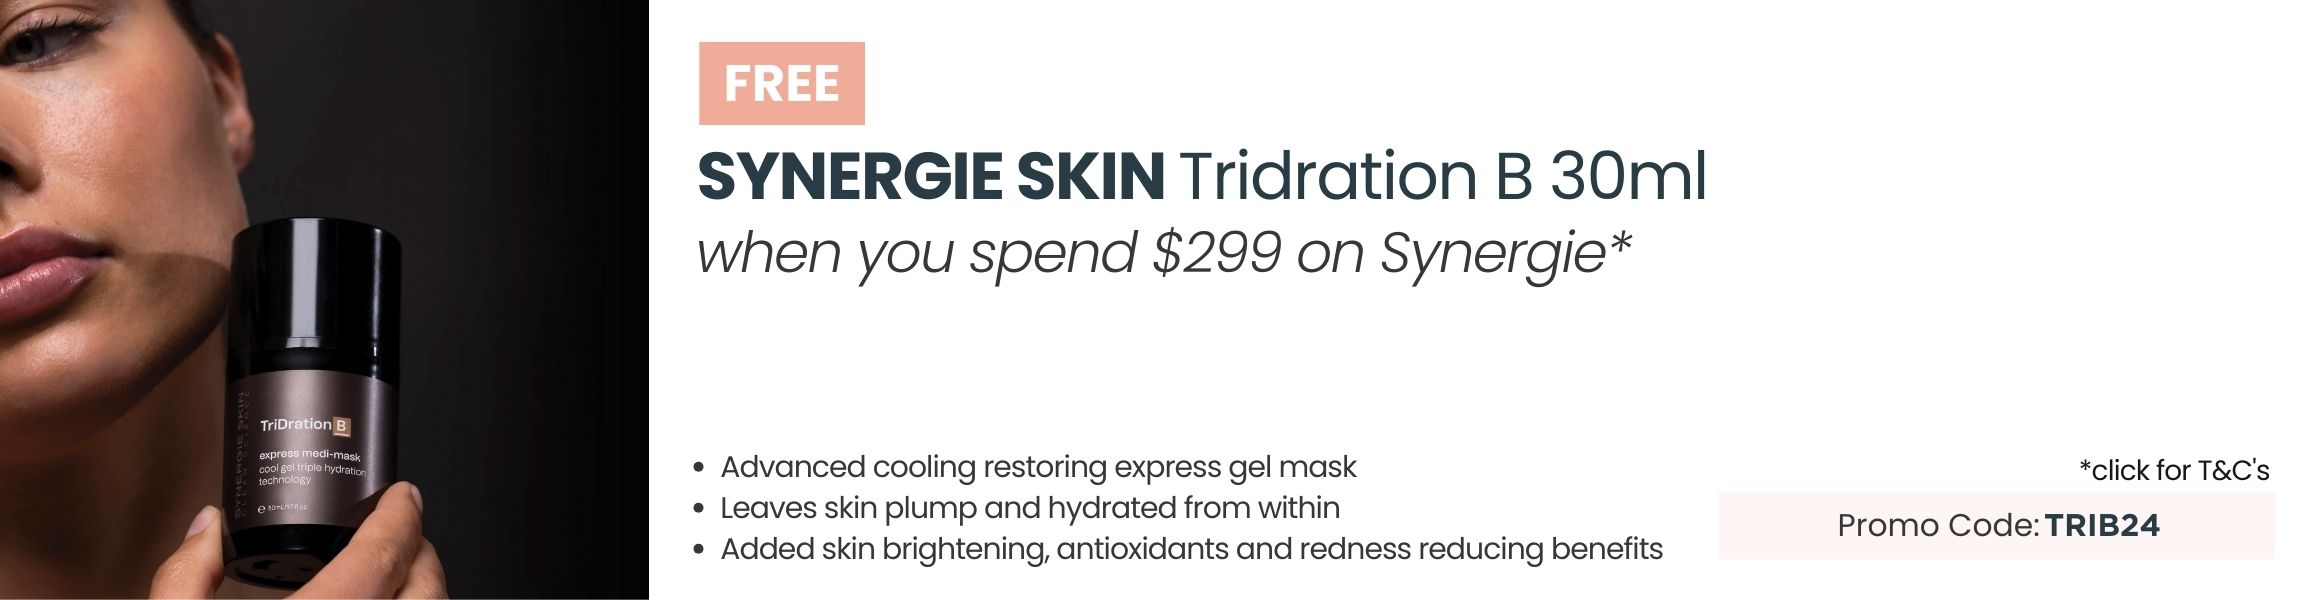 FREE Synergie Skin TriDration B 50ml worth $99. Min spend $299 on Synergie. Use Promo Code: TRIB24